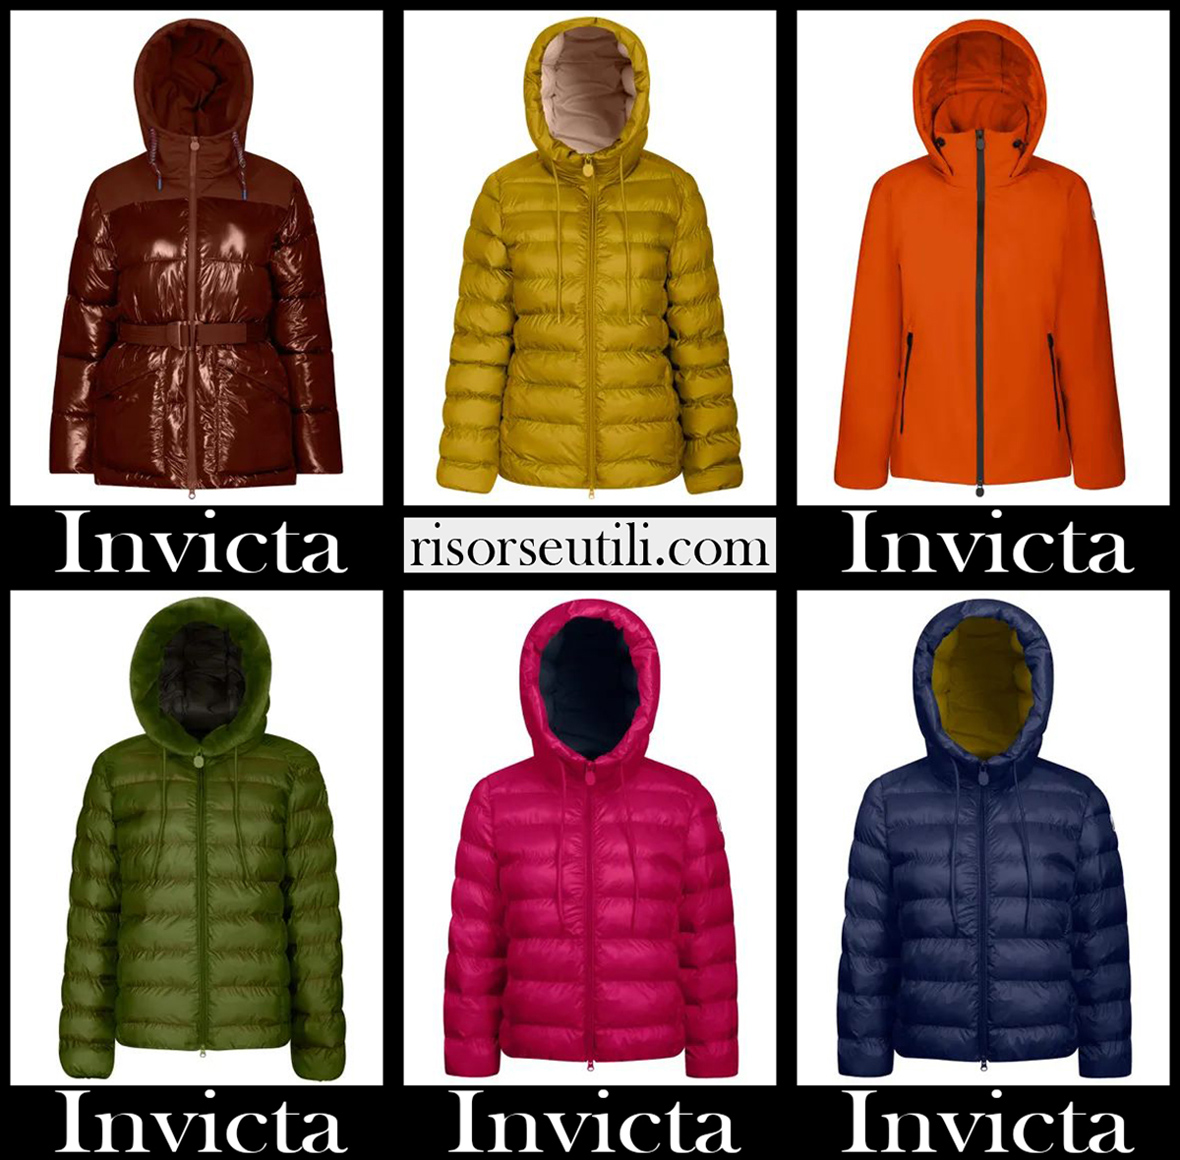 New arrivals Invicta jackets 2022 womens fashion